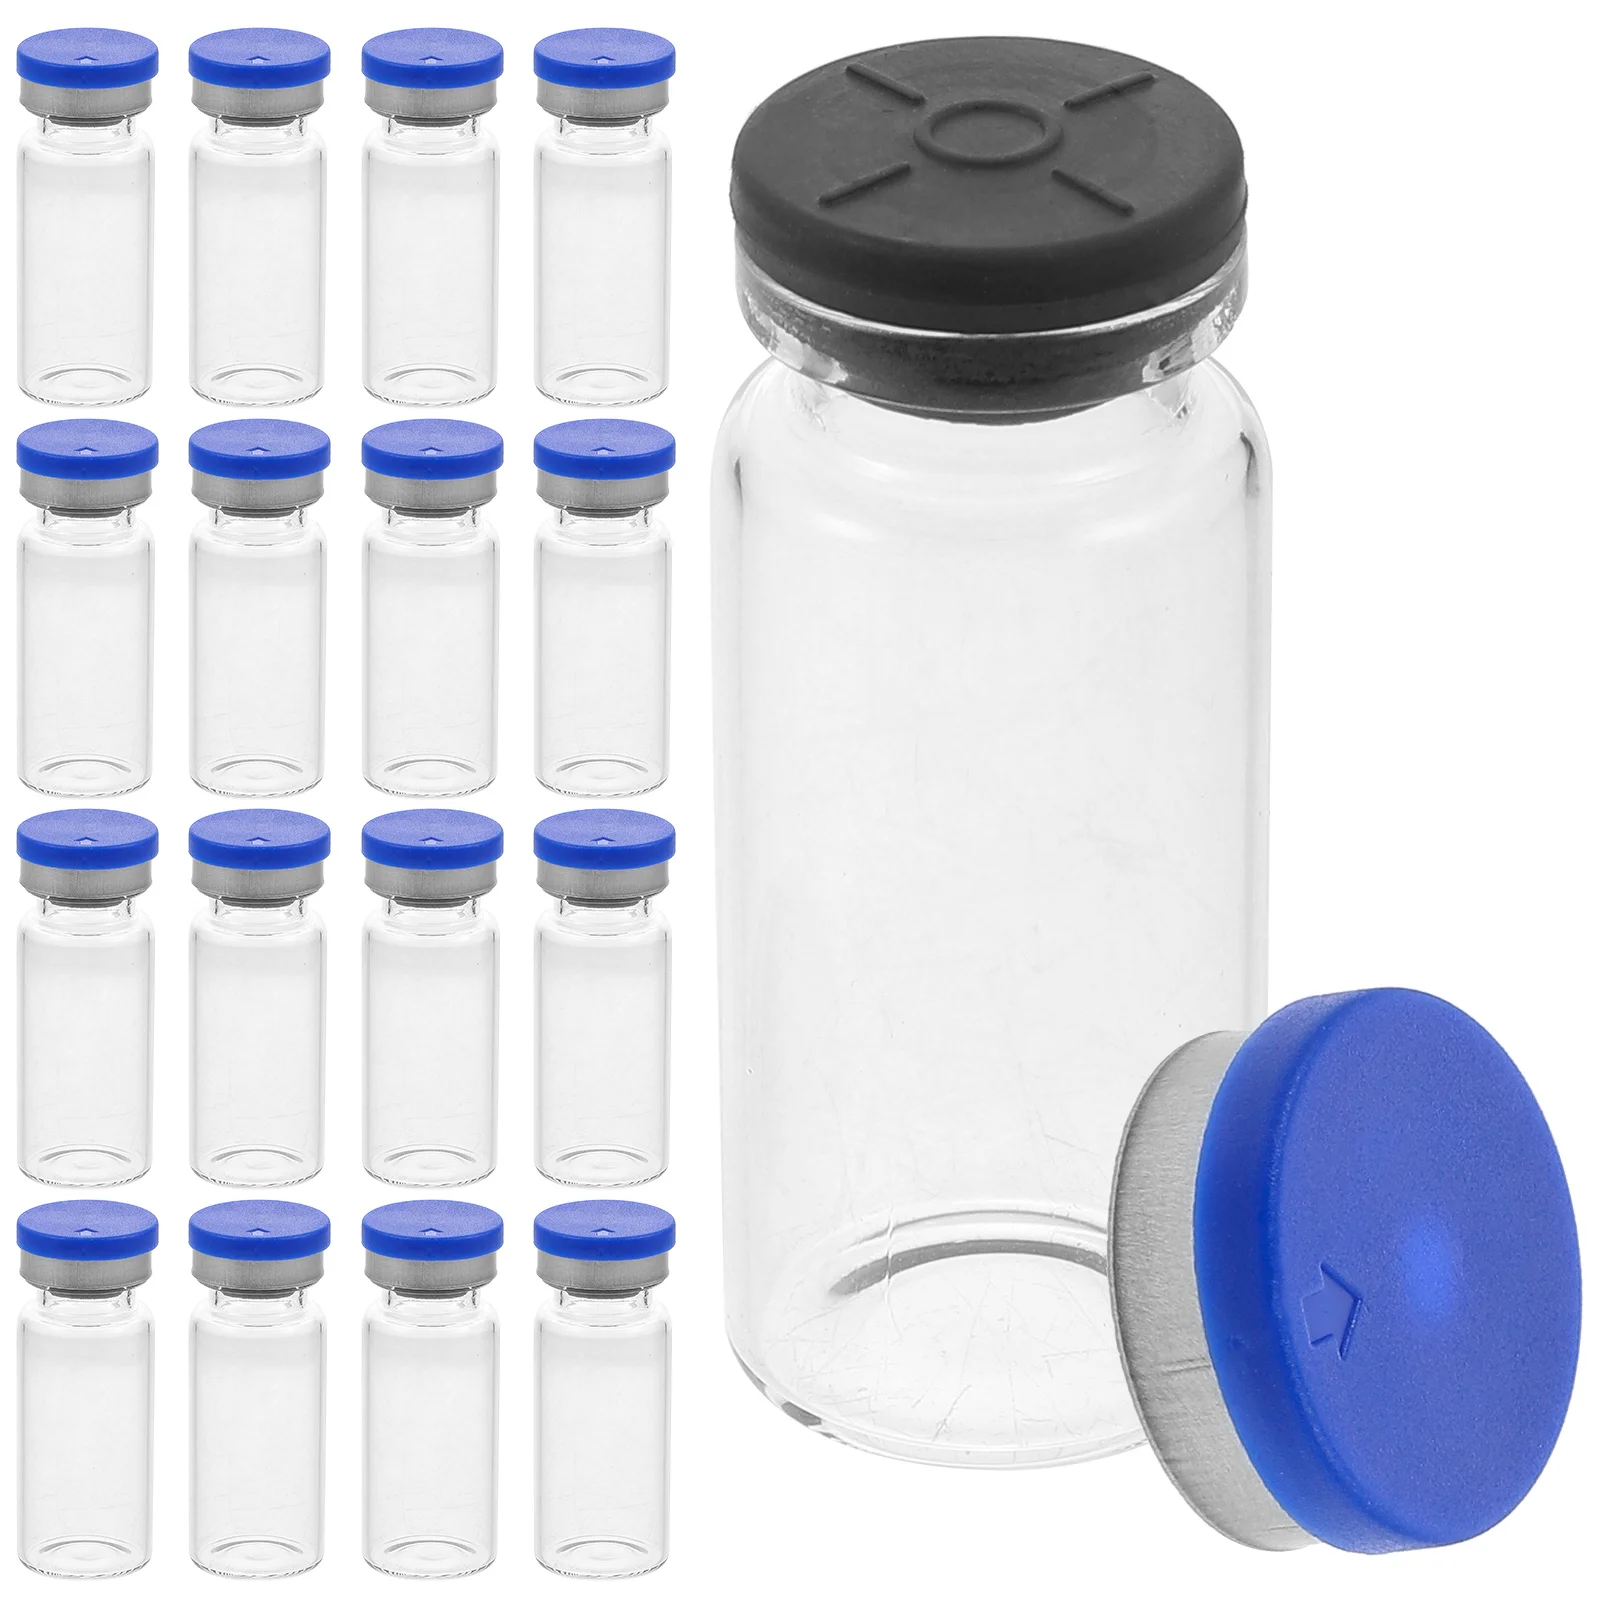 

20 Pcs Travel Size Liquid Containers Freeze-dried Powder Bottle Sample Glass Bottles Clear Vials Mini Empty